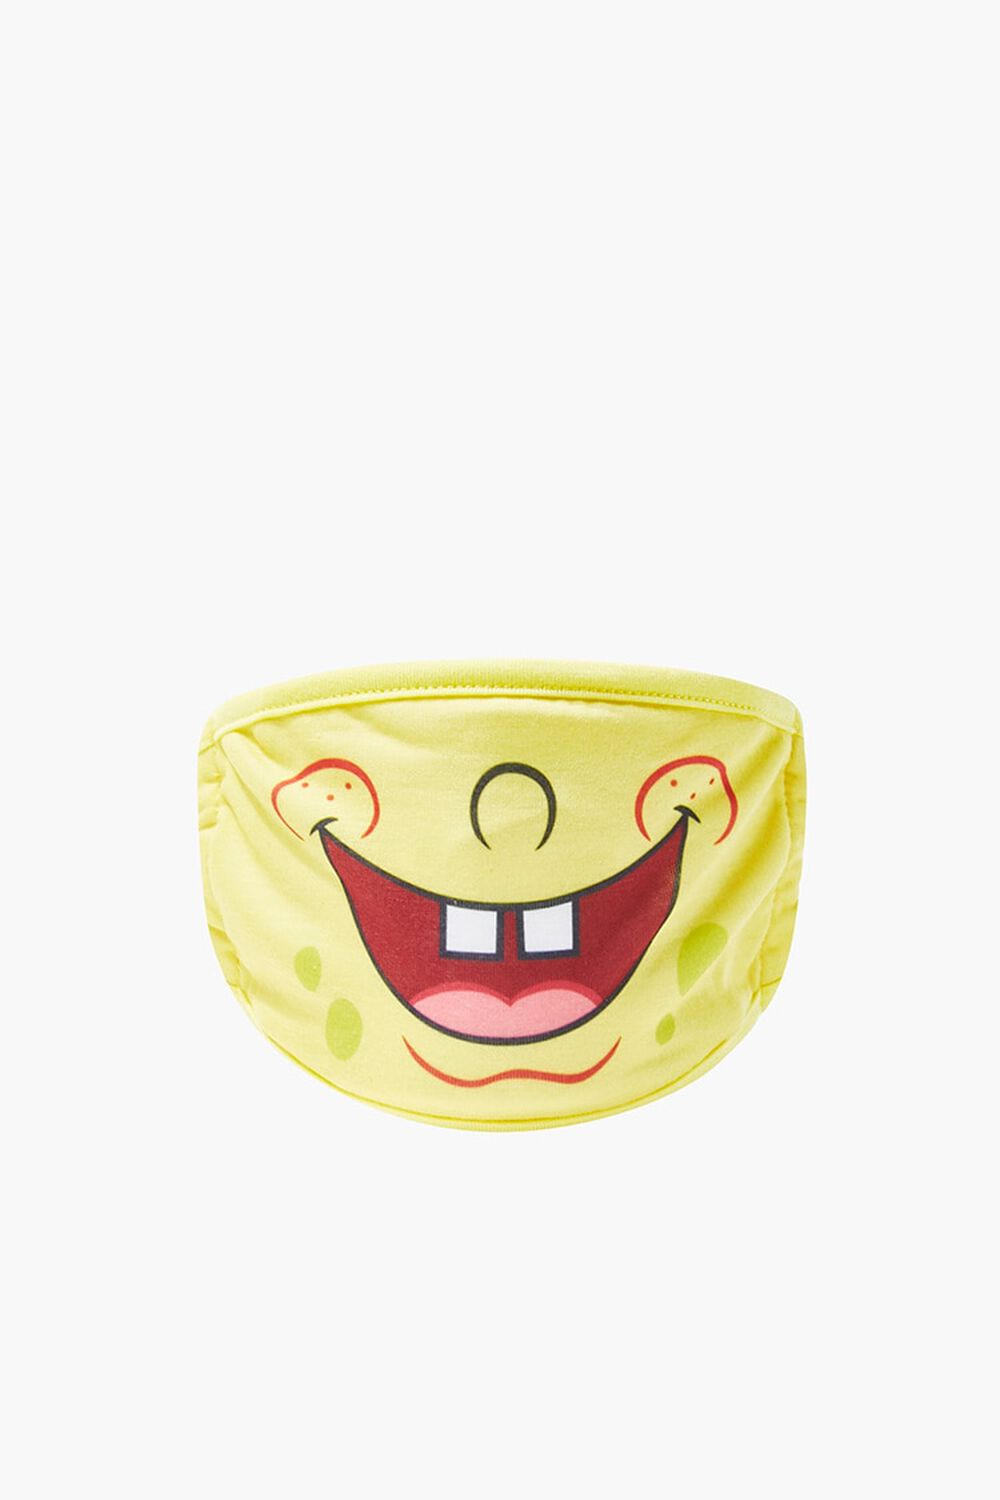 SpongeBob SquarePants Face Mask, image 1